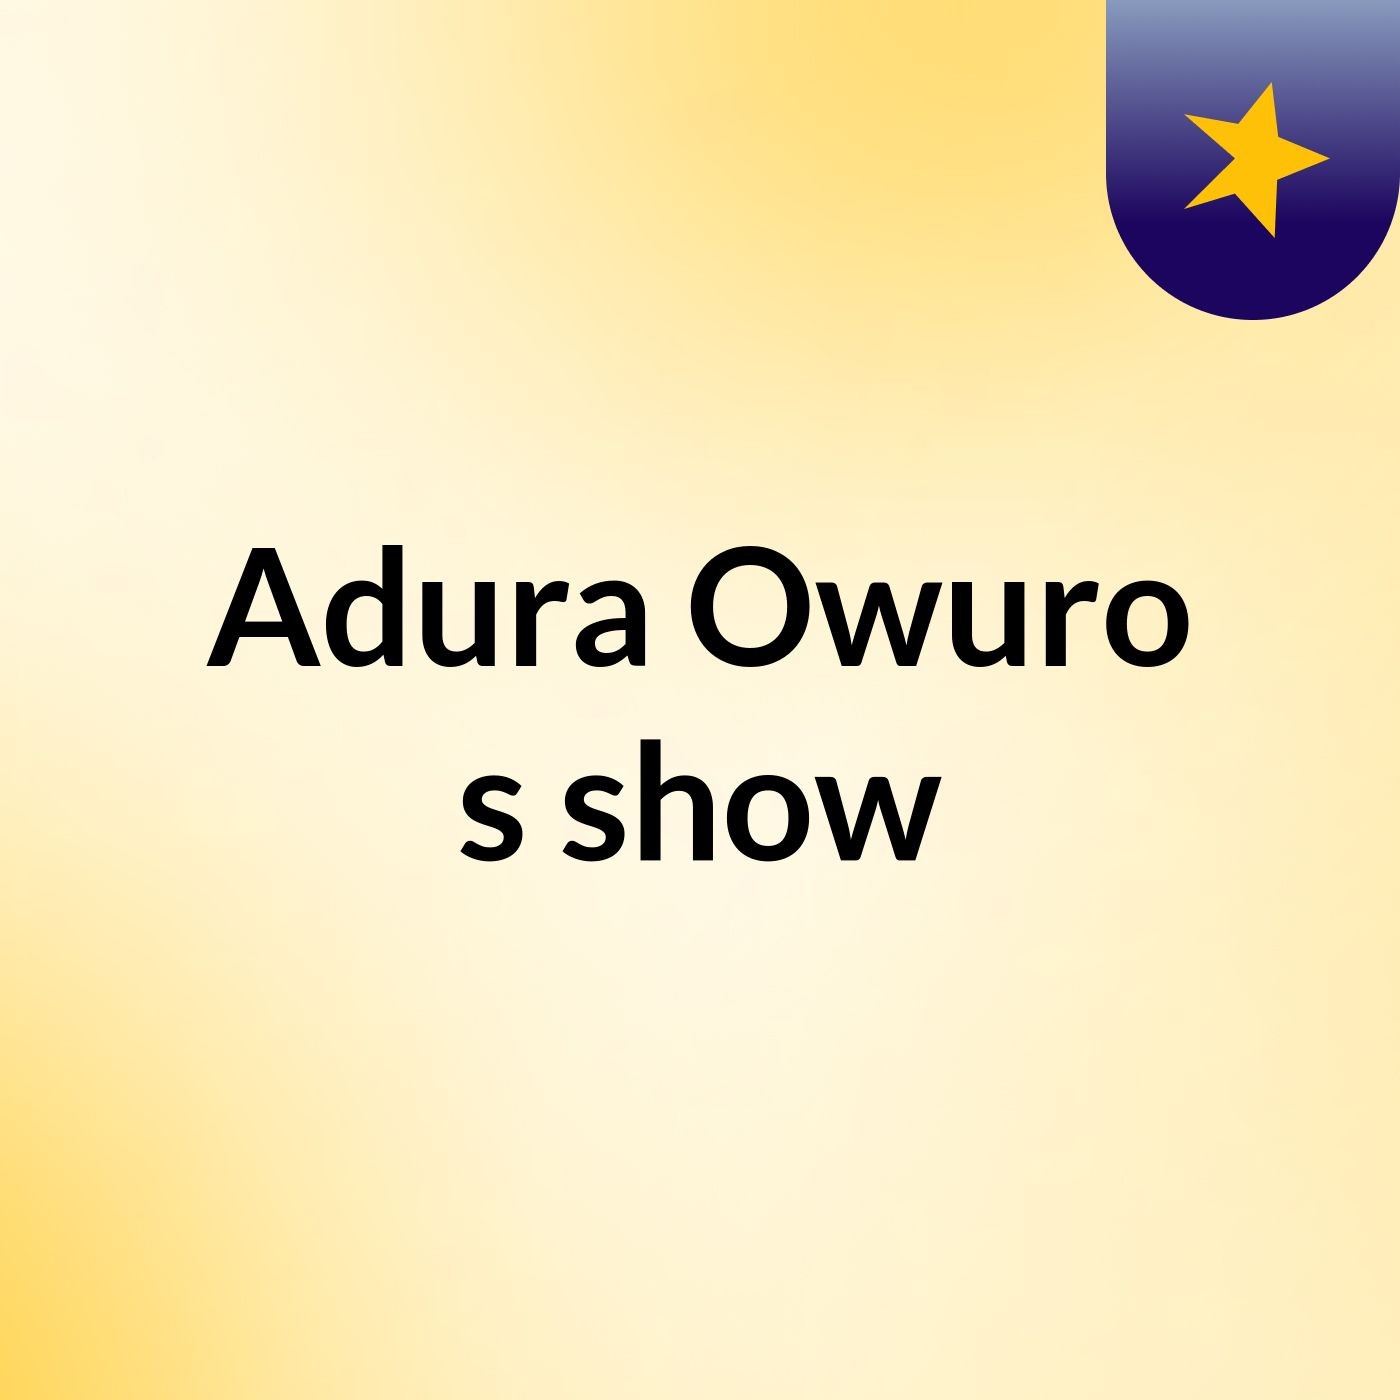 Episode 2 - Adura Owuro's show